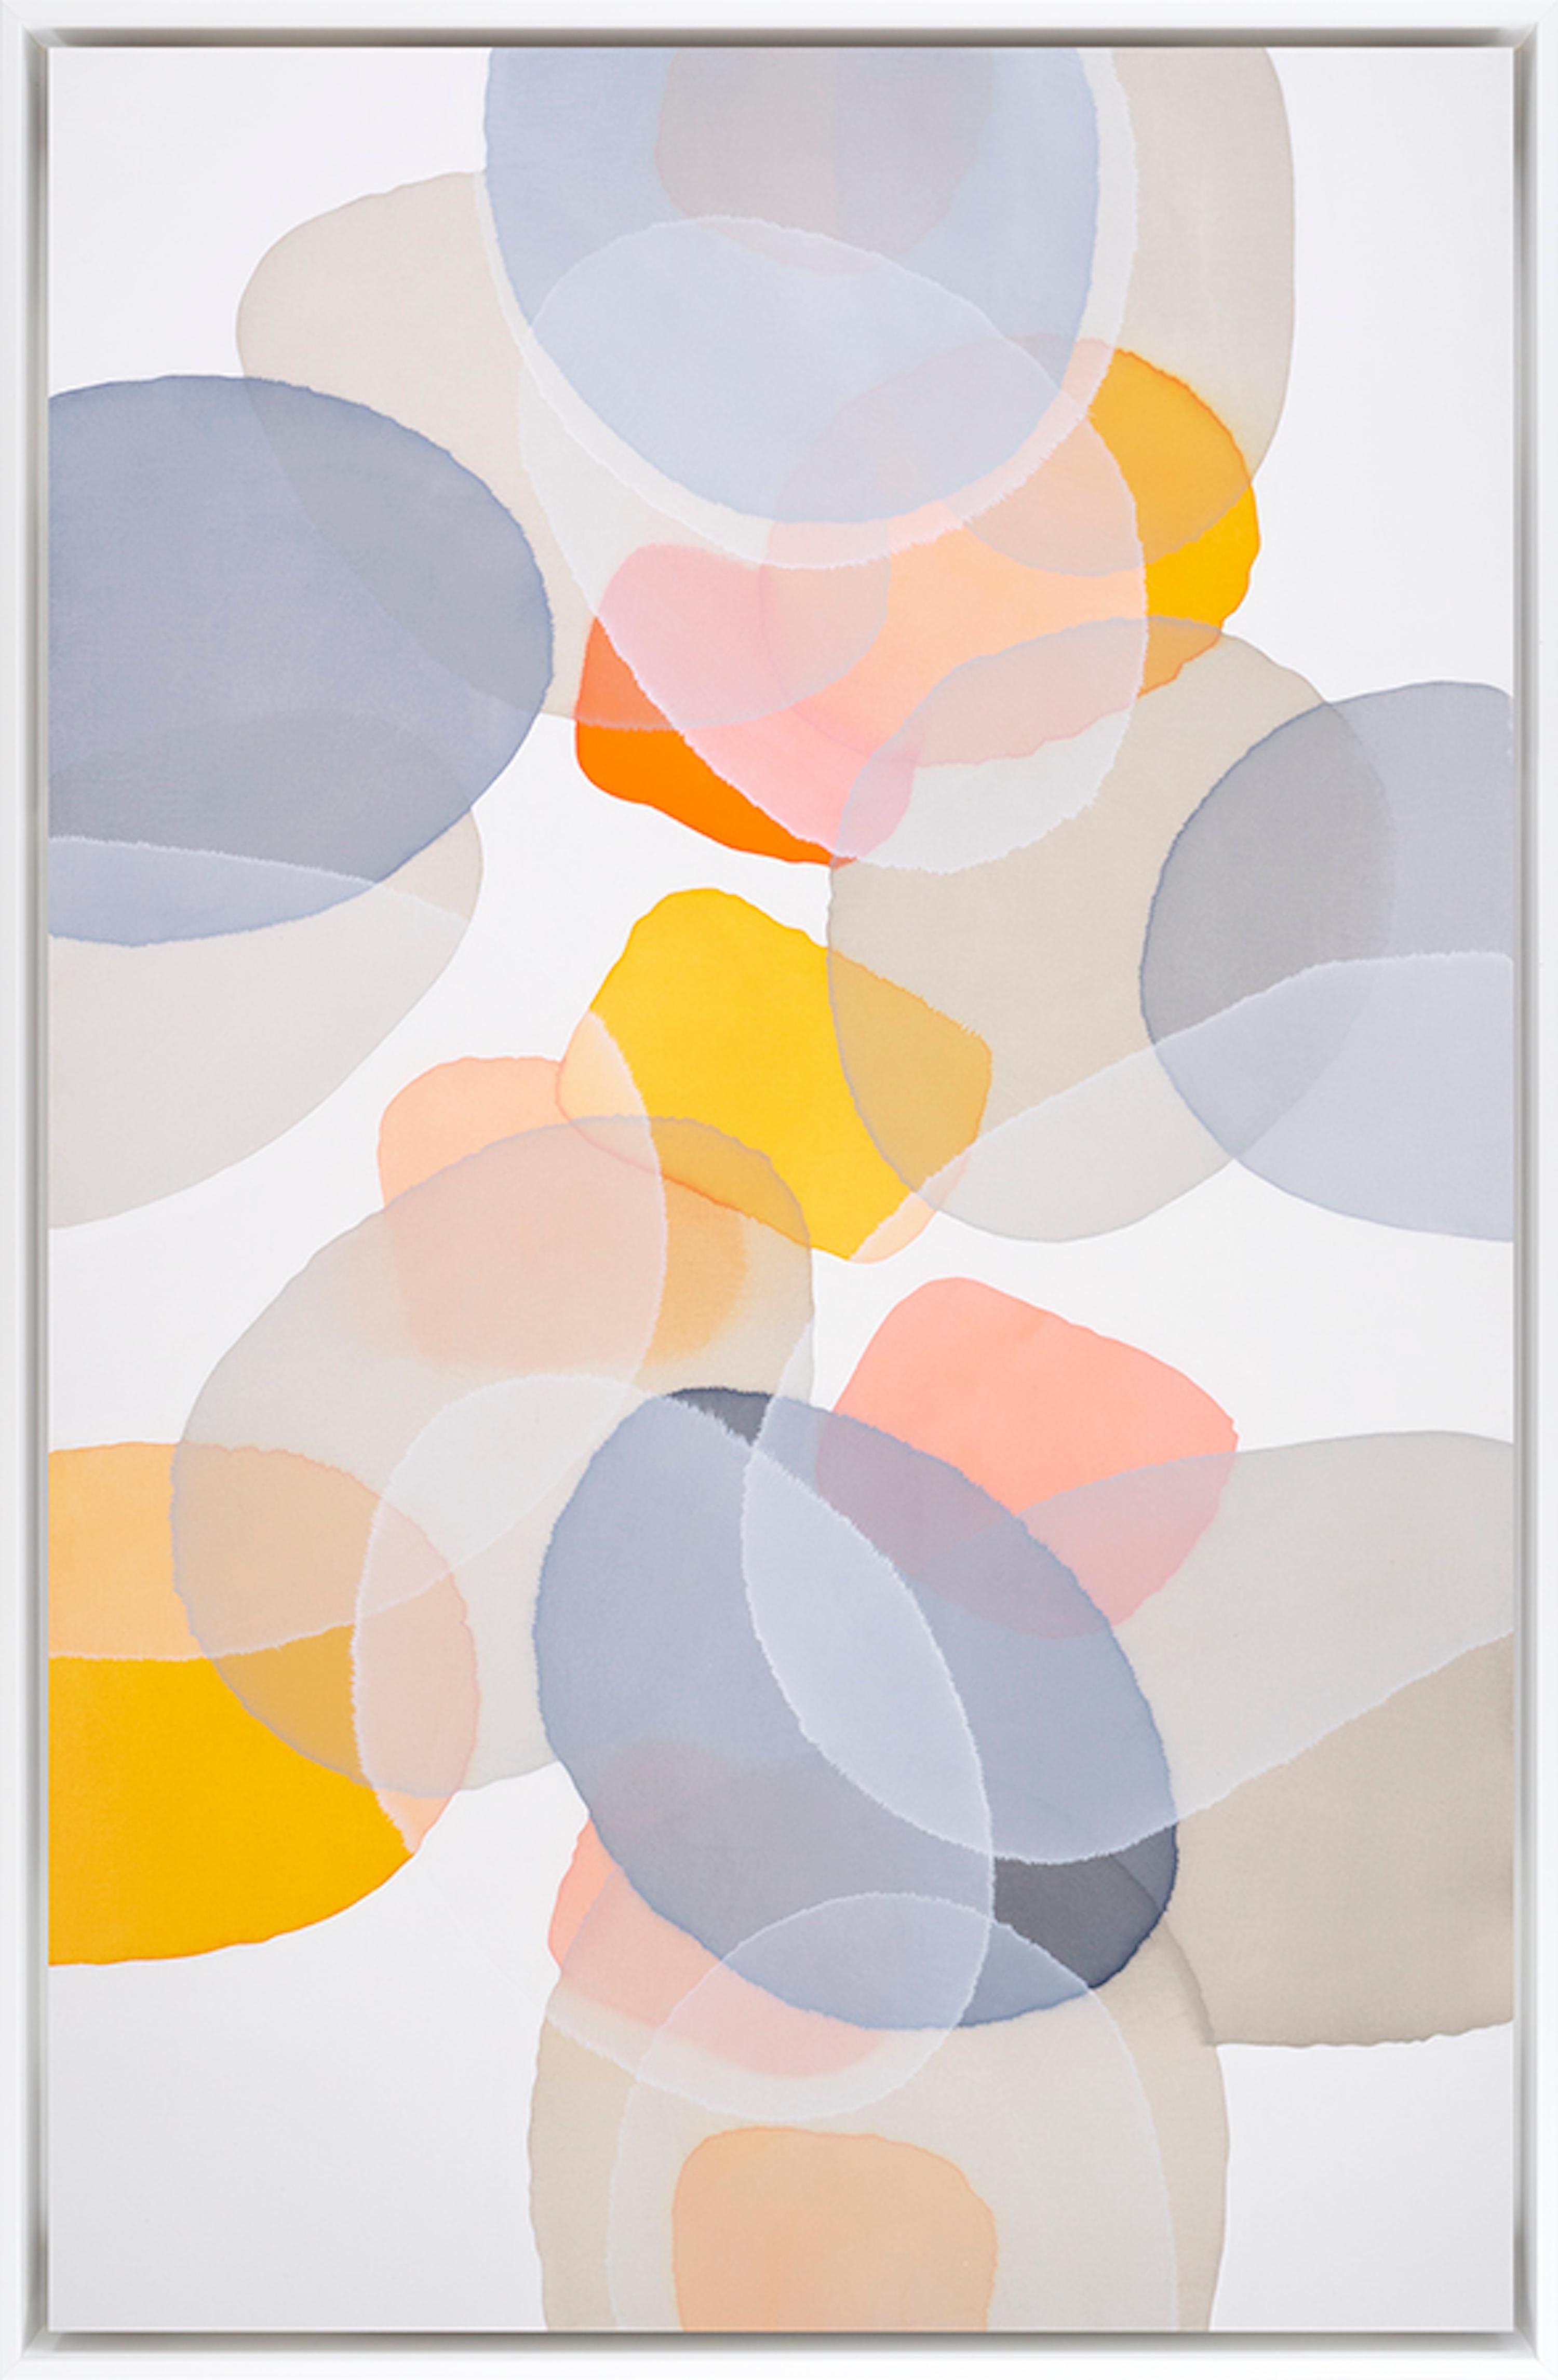 Abstract Painting Charlie Bluett - "Every Day Is A Blessing" Peinture abstraite contemporaine à l'acrylique sur toile